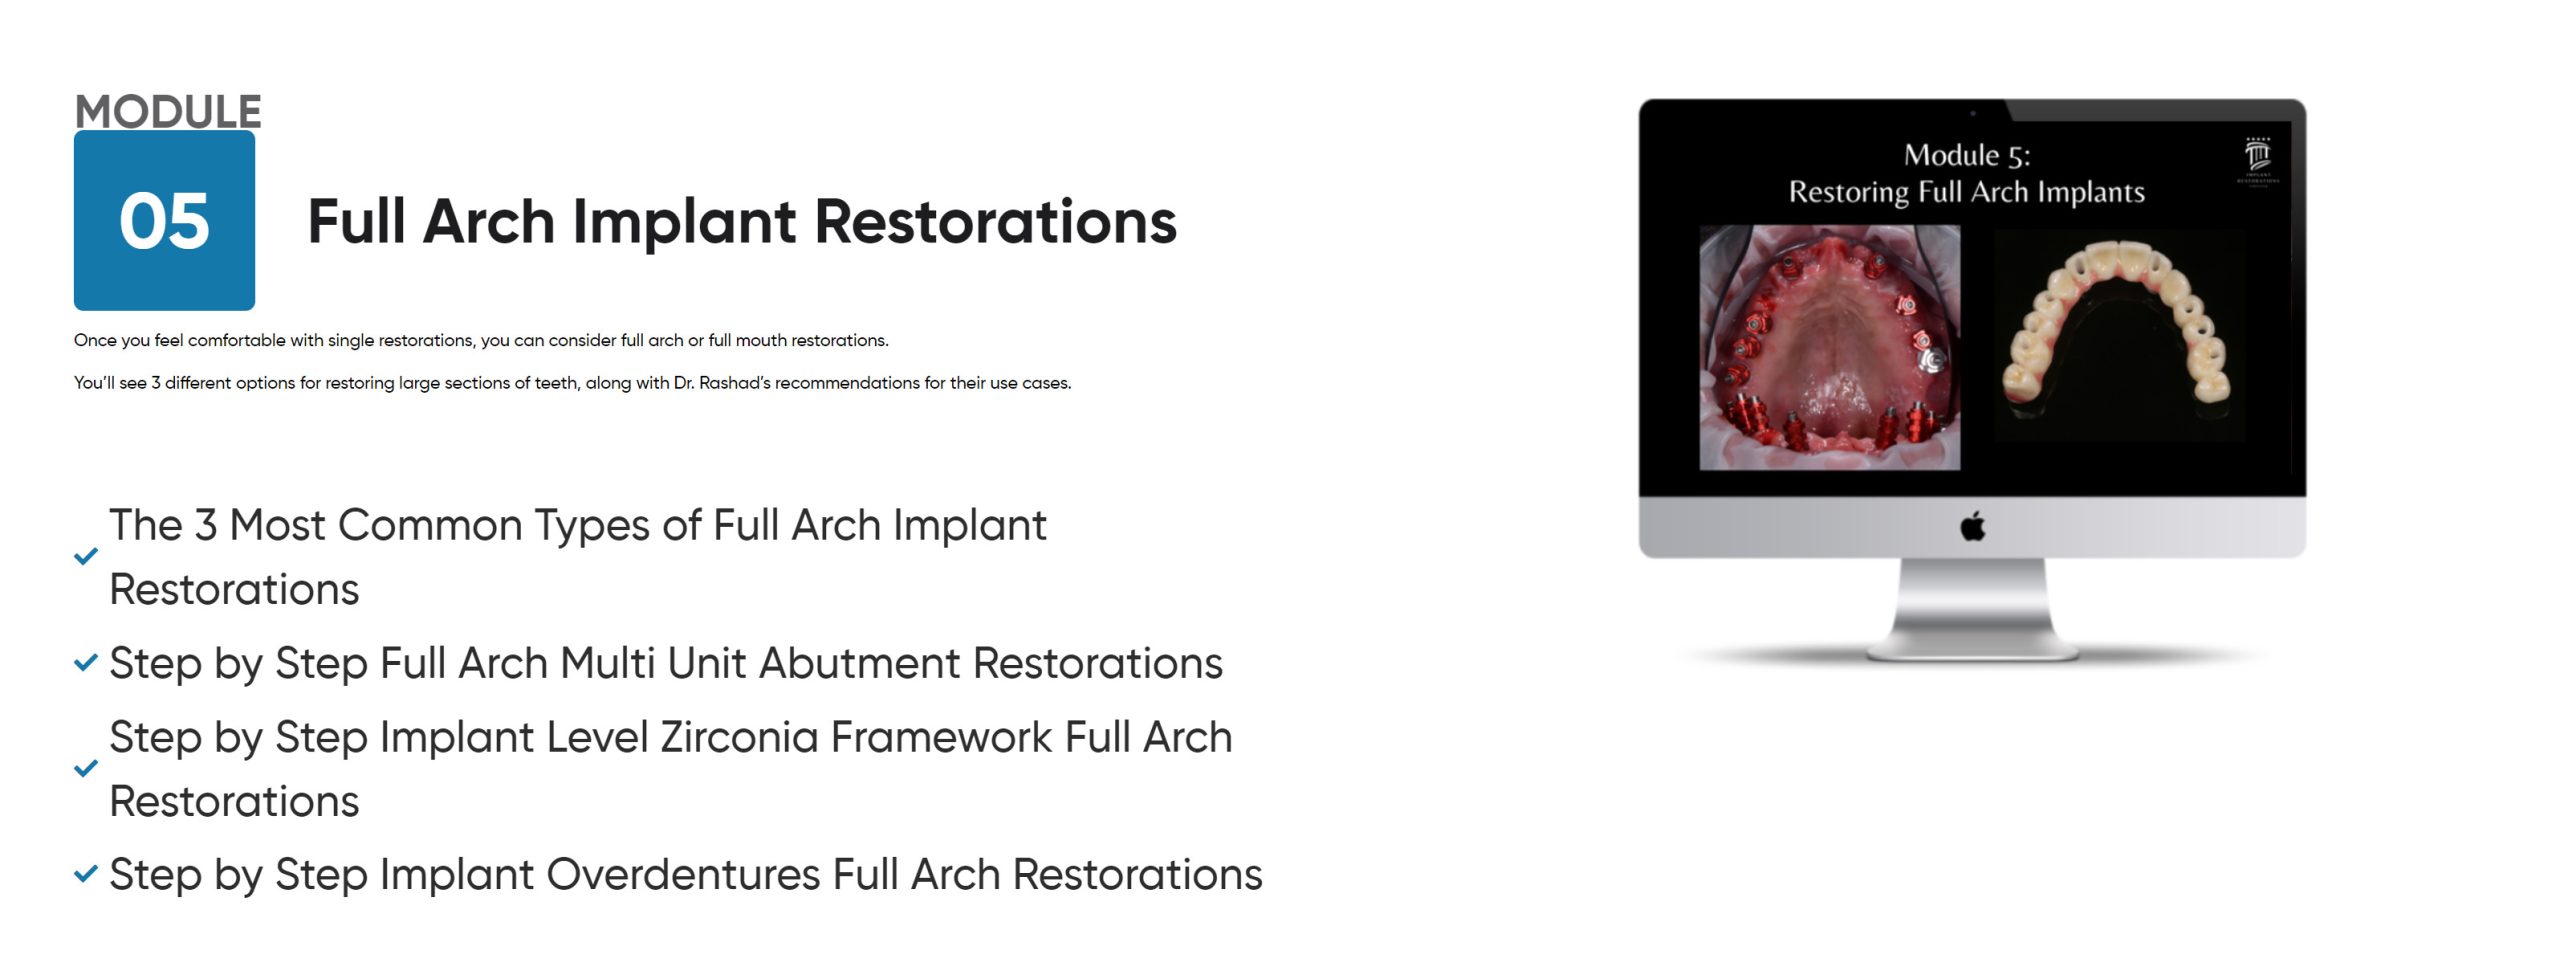 Full Arch Implant Restorations